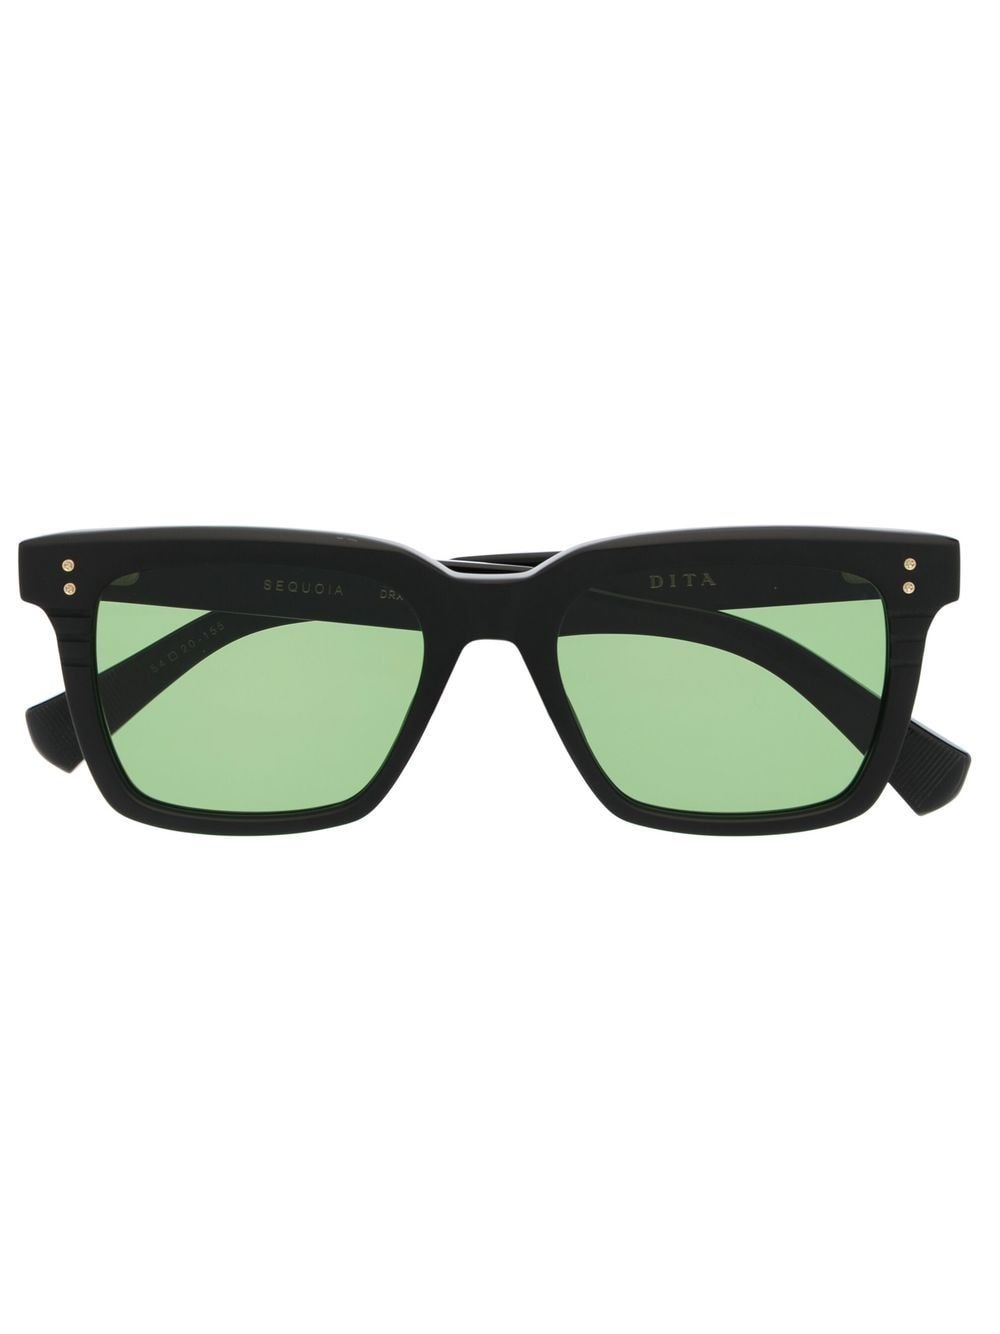 wayfarer-frame sunglasses - 1